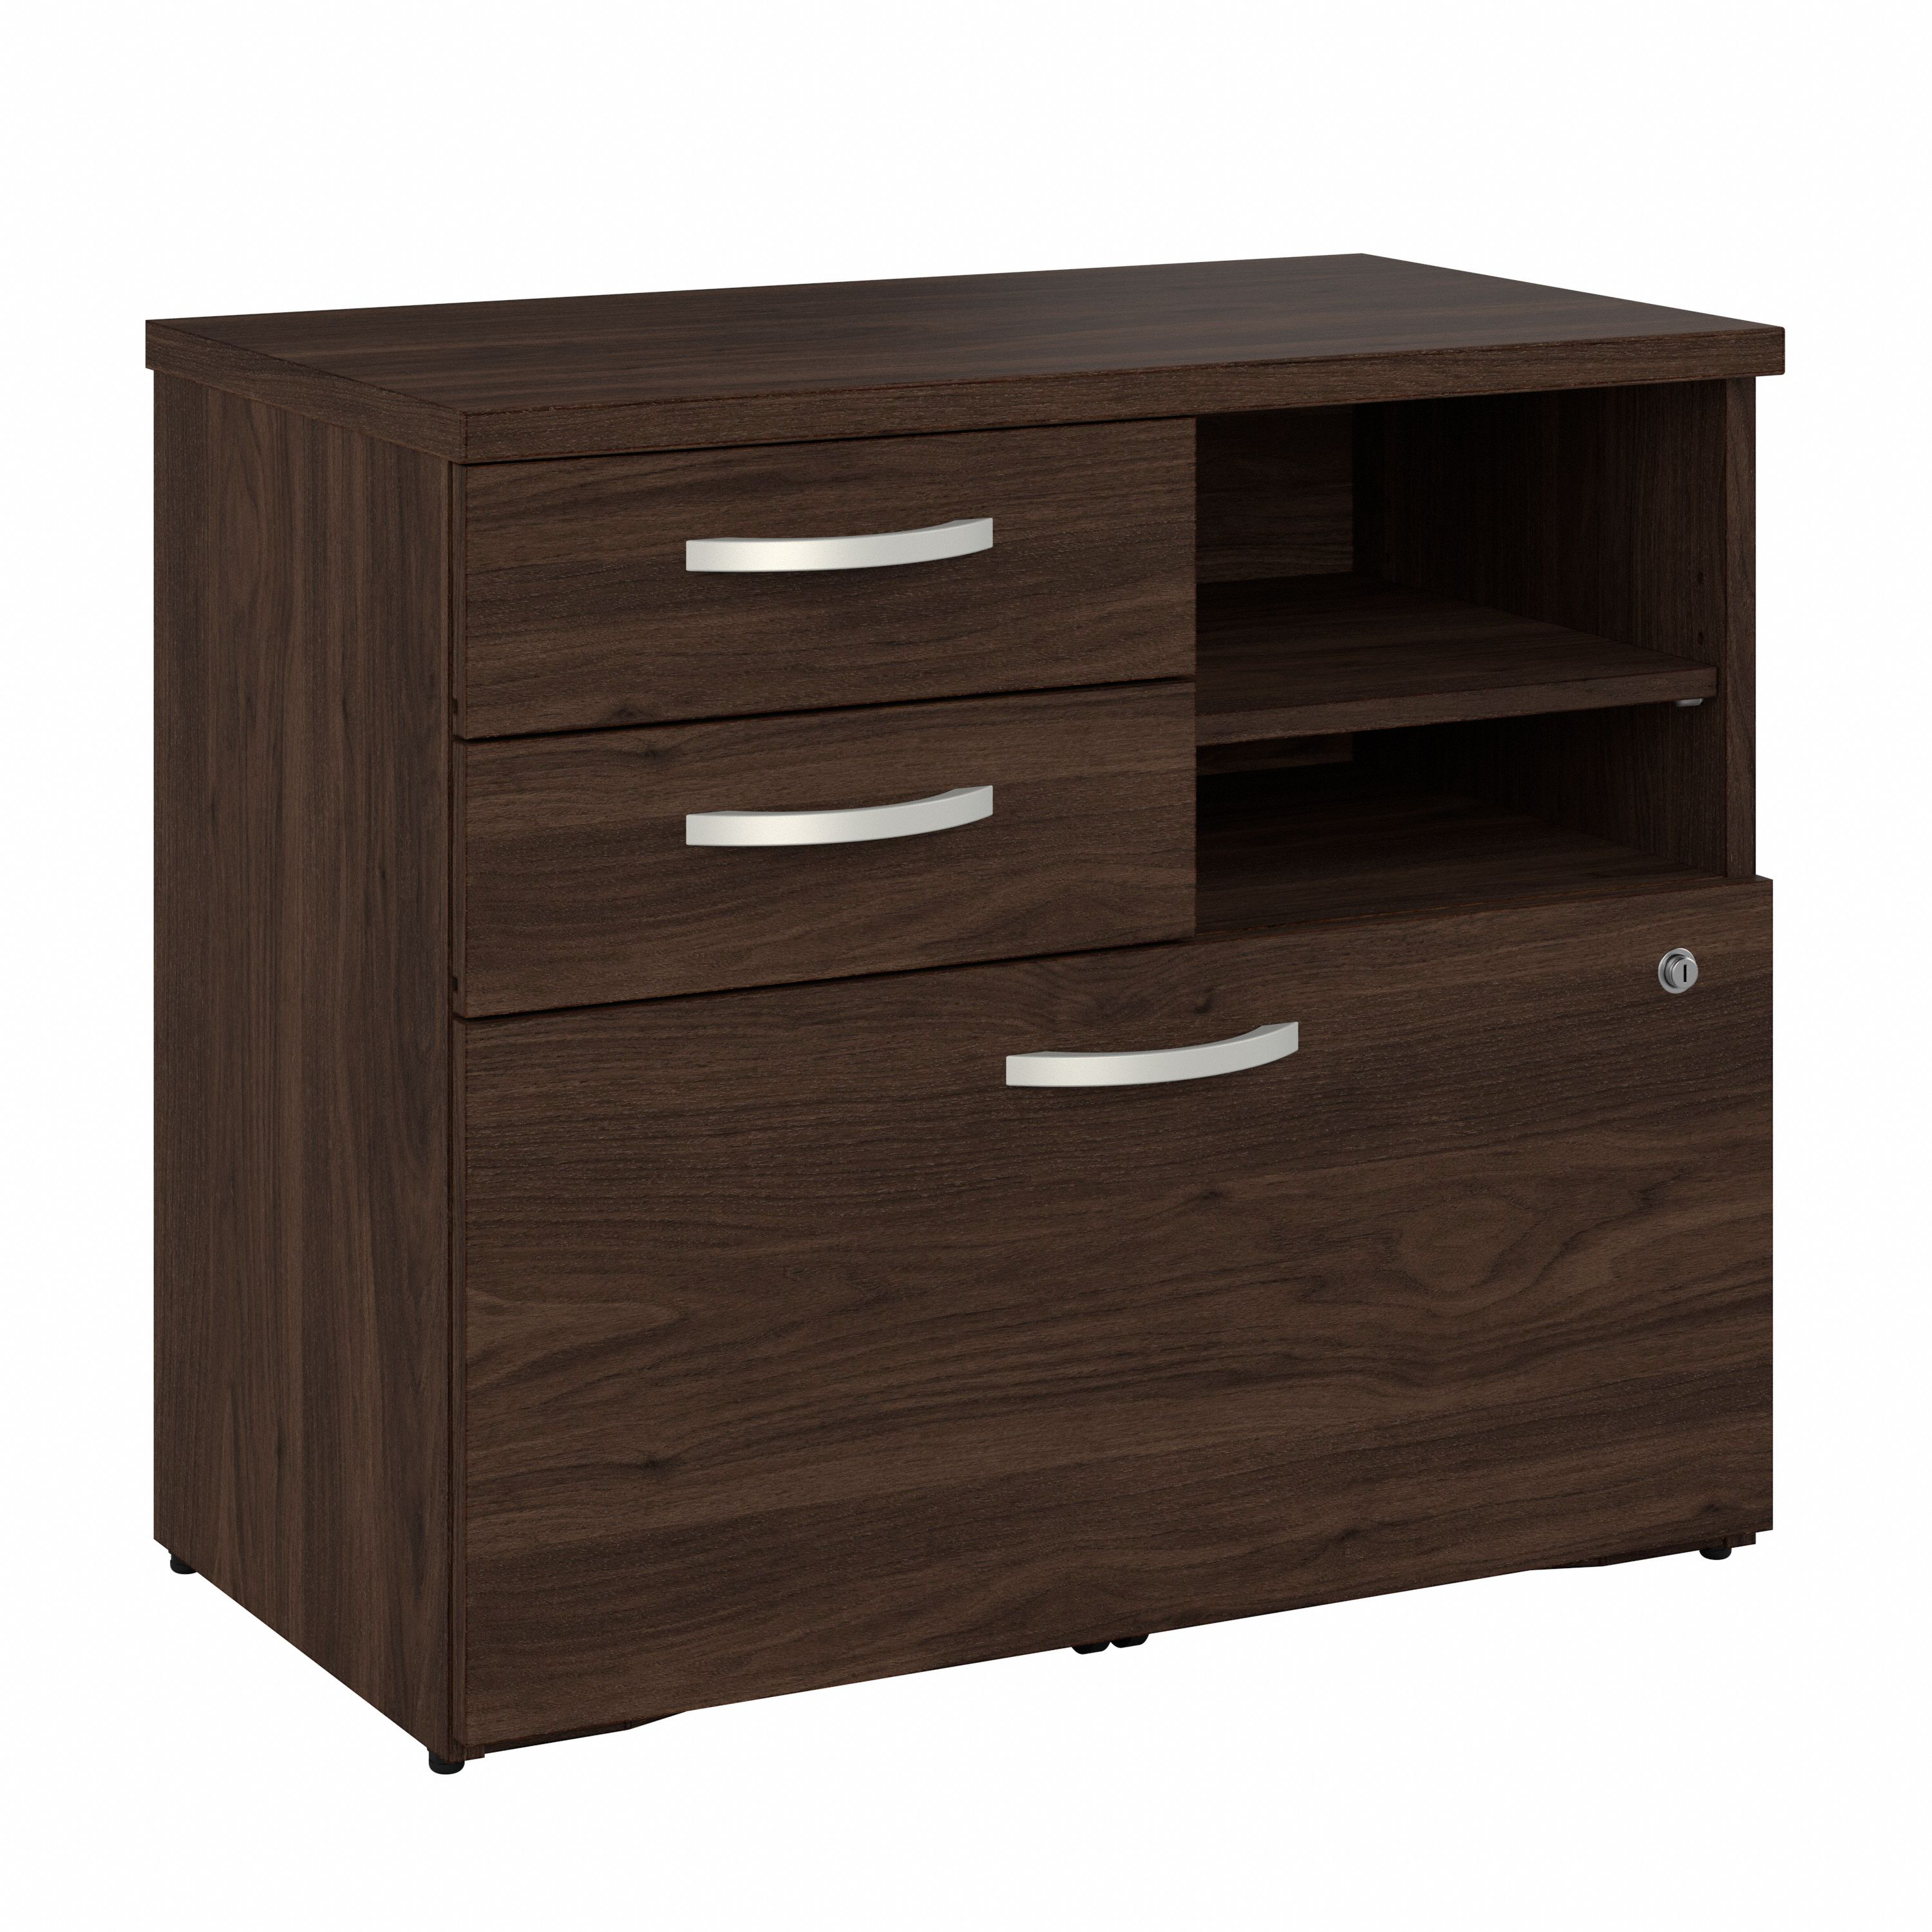 Shop Bush Business Furniture Hybrid Office Storage Cabinet with Drawers and Shelves 02 HYF130BWSU-Z #color_black walnut